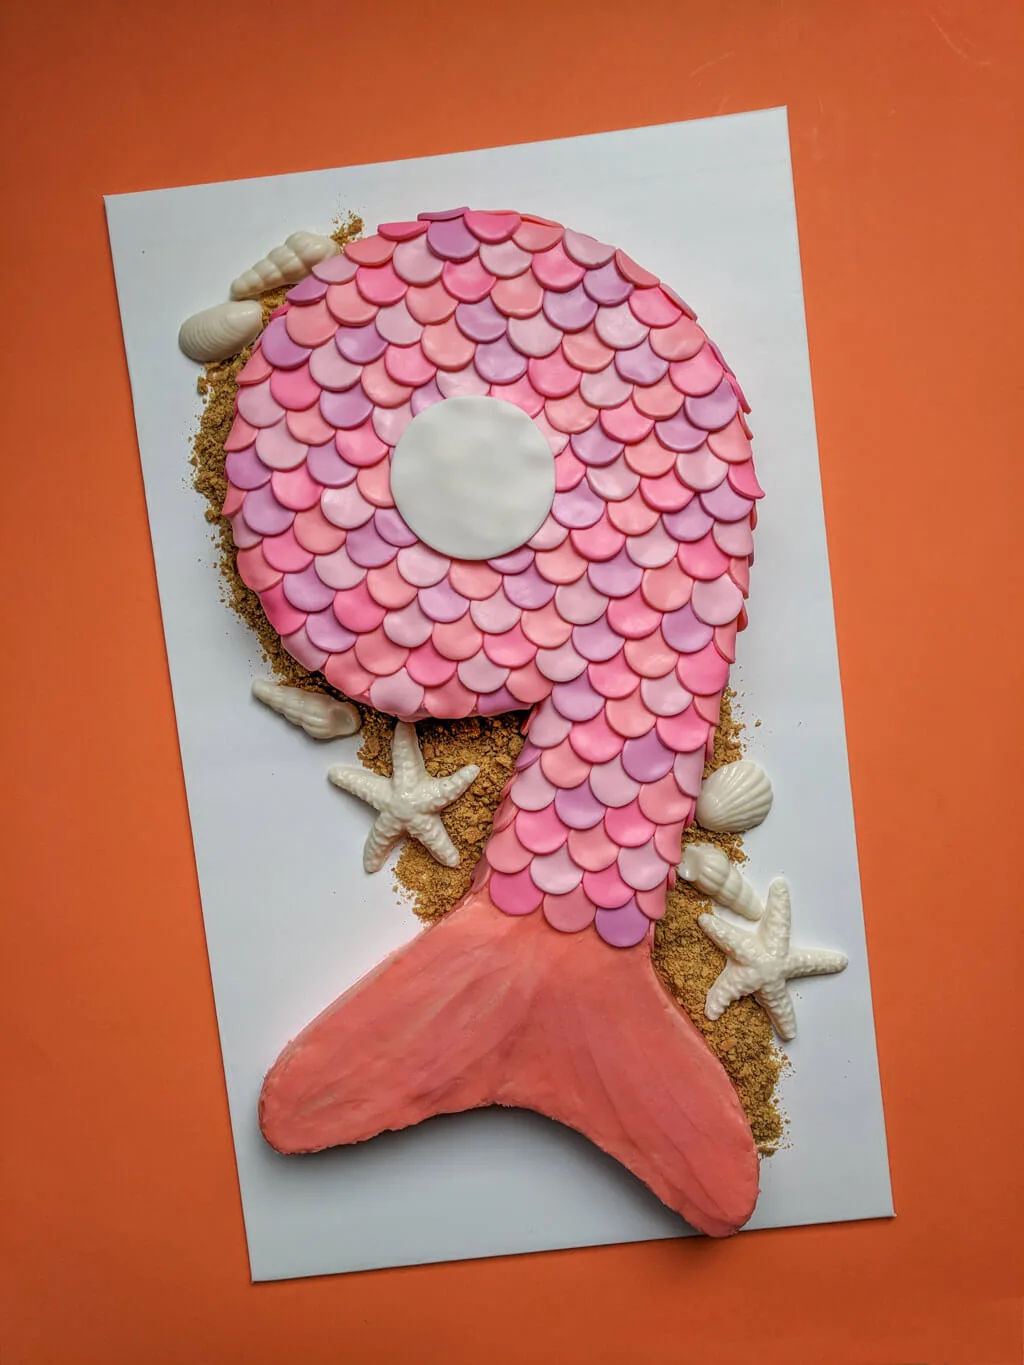 Easy Mermaid Cake for a Mermaid Birthday Party - Merriment Design